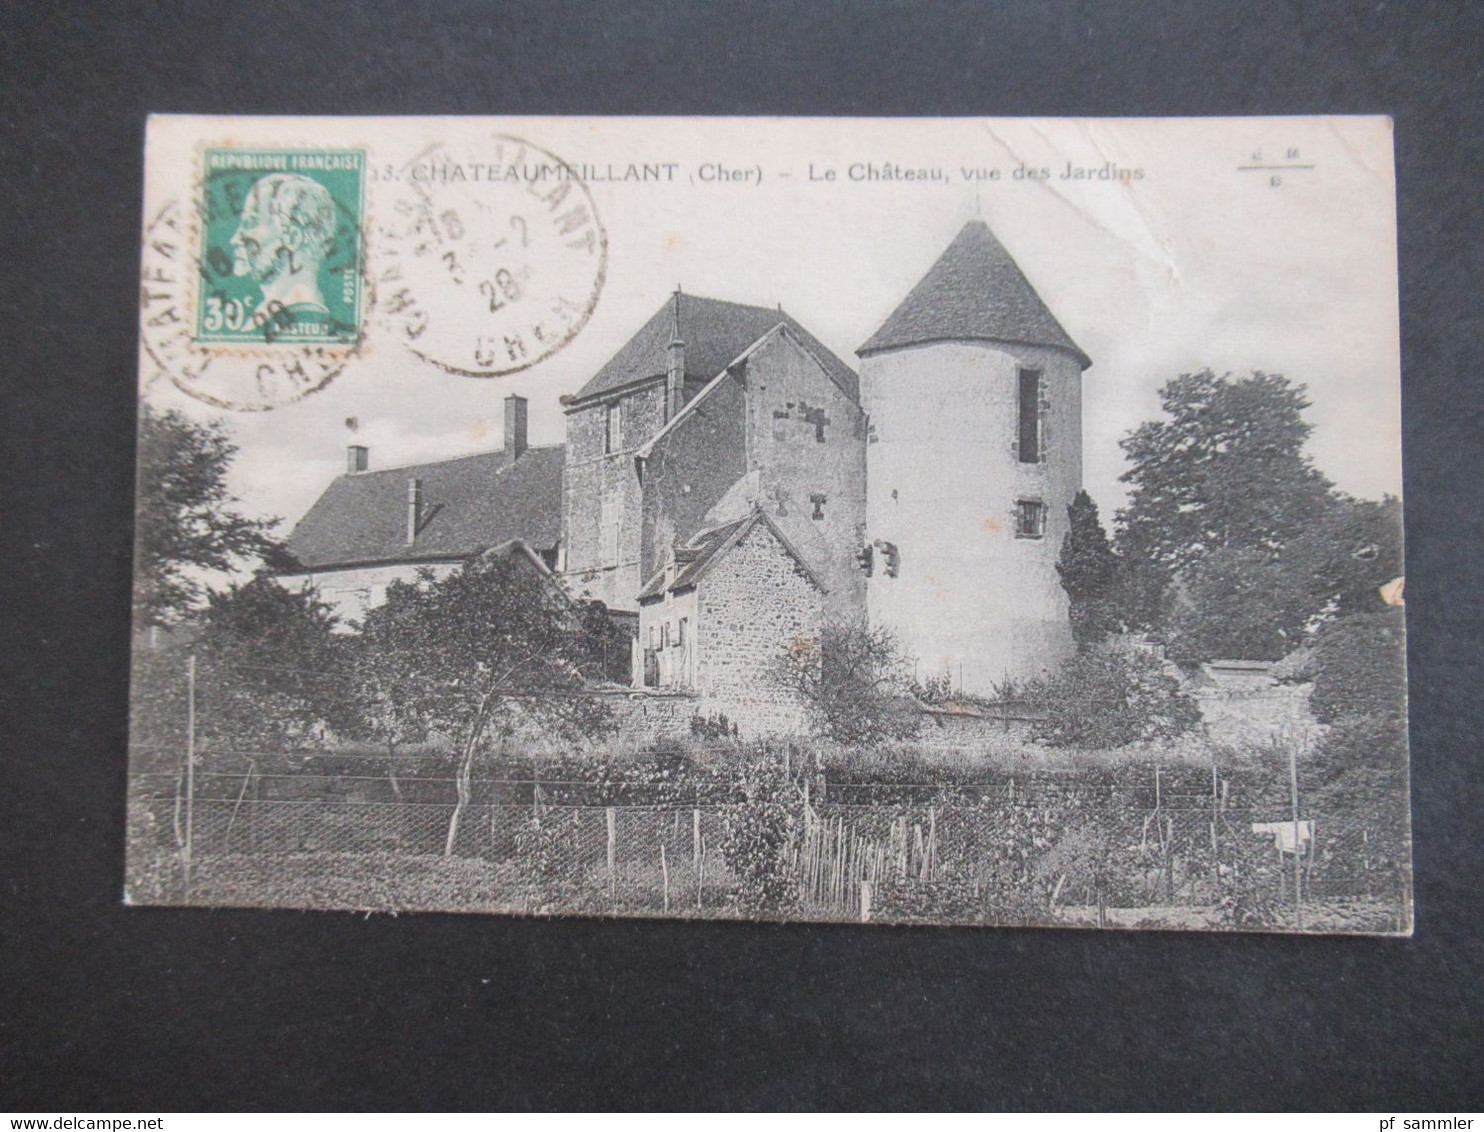 Frankreich 1928 Chateaumeillant (Cher) Le Chateau Vue Des Jardins An Eine Adresse In Luxemburg Geschrieben - Châteaumeillant